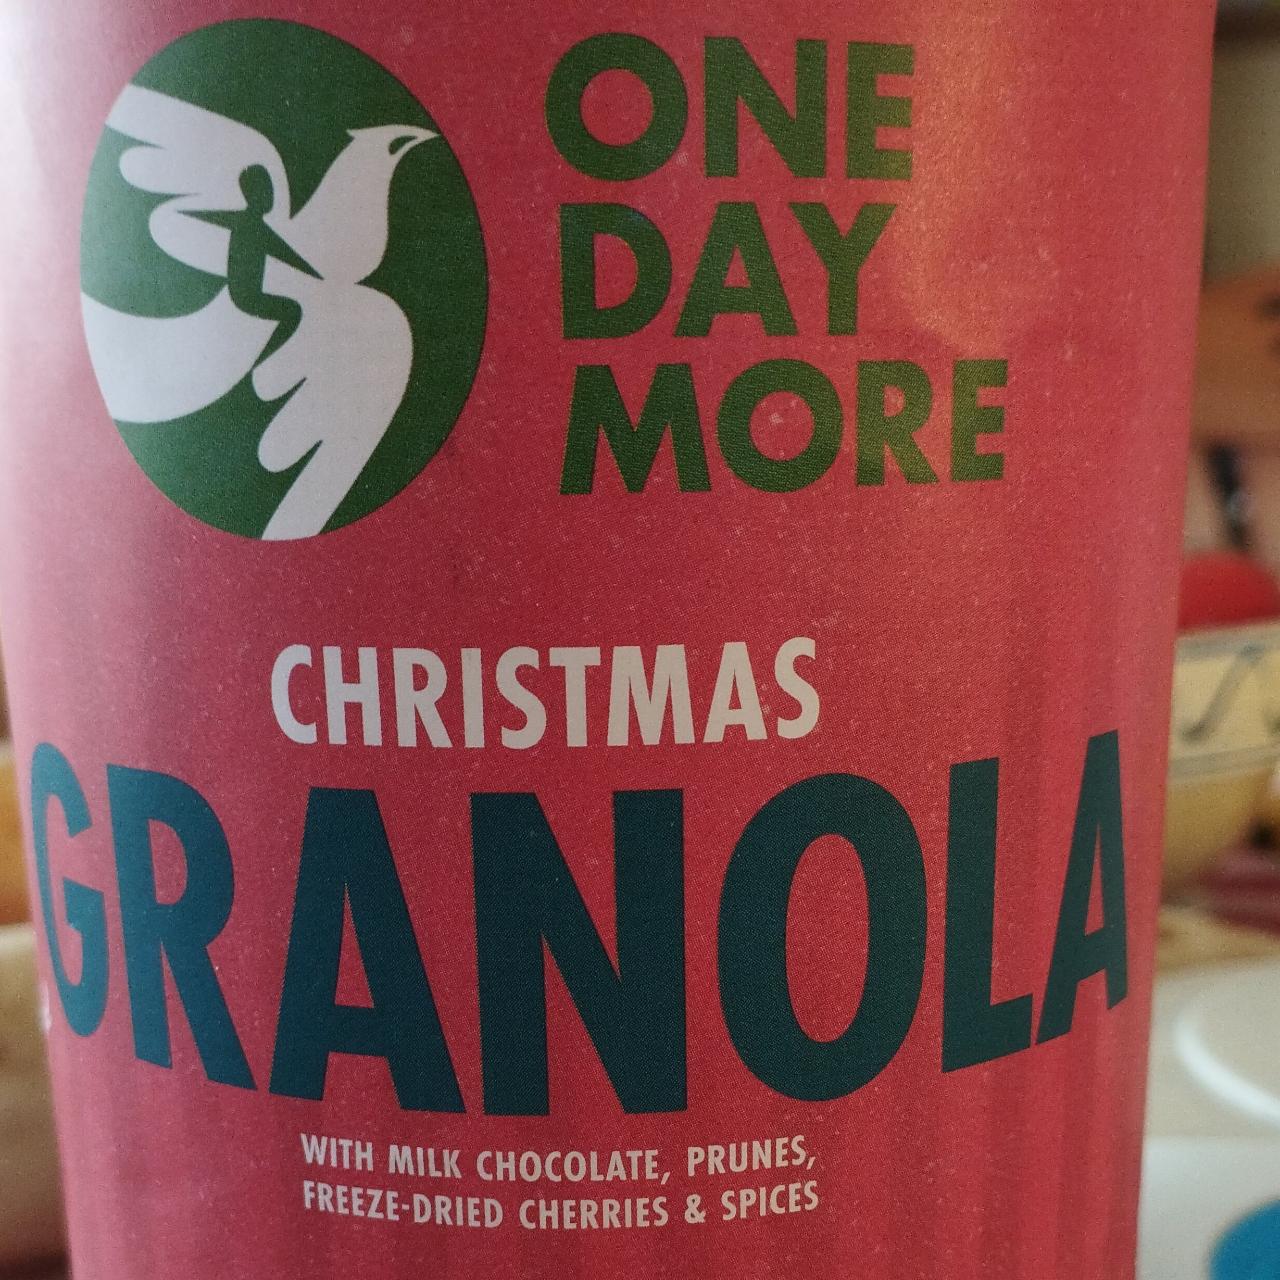 Képek - Christmas granola OneDayMore